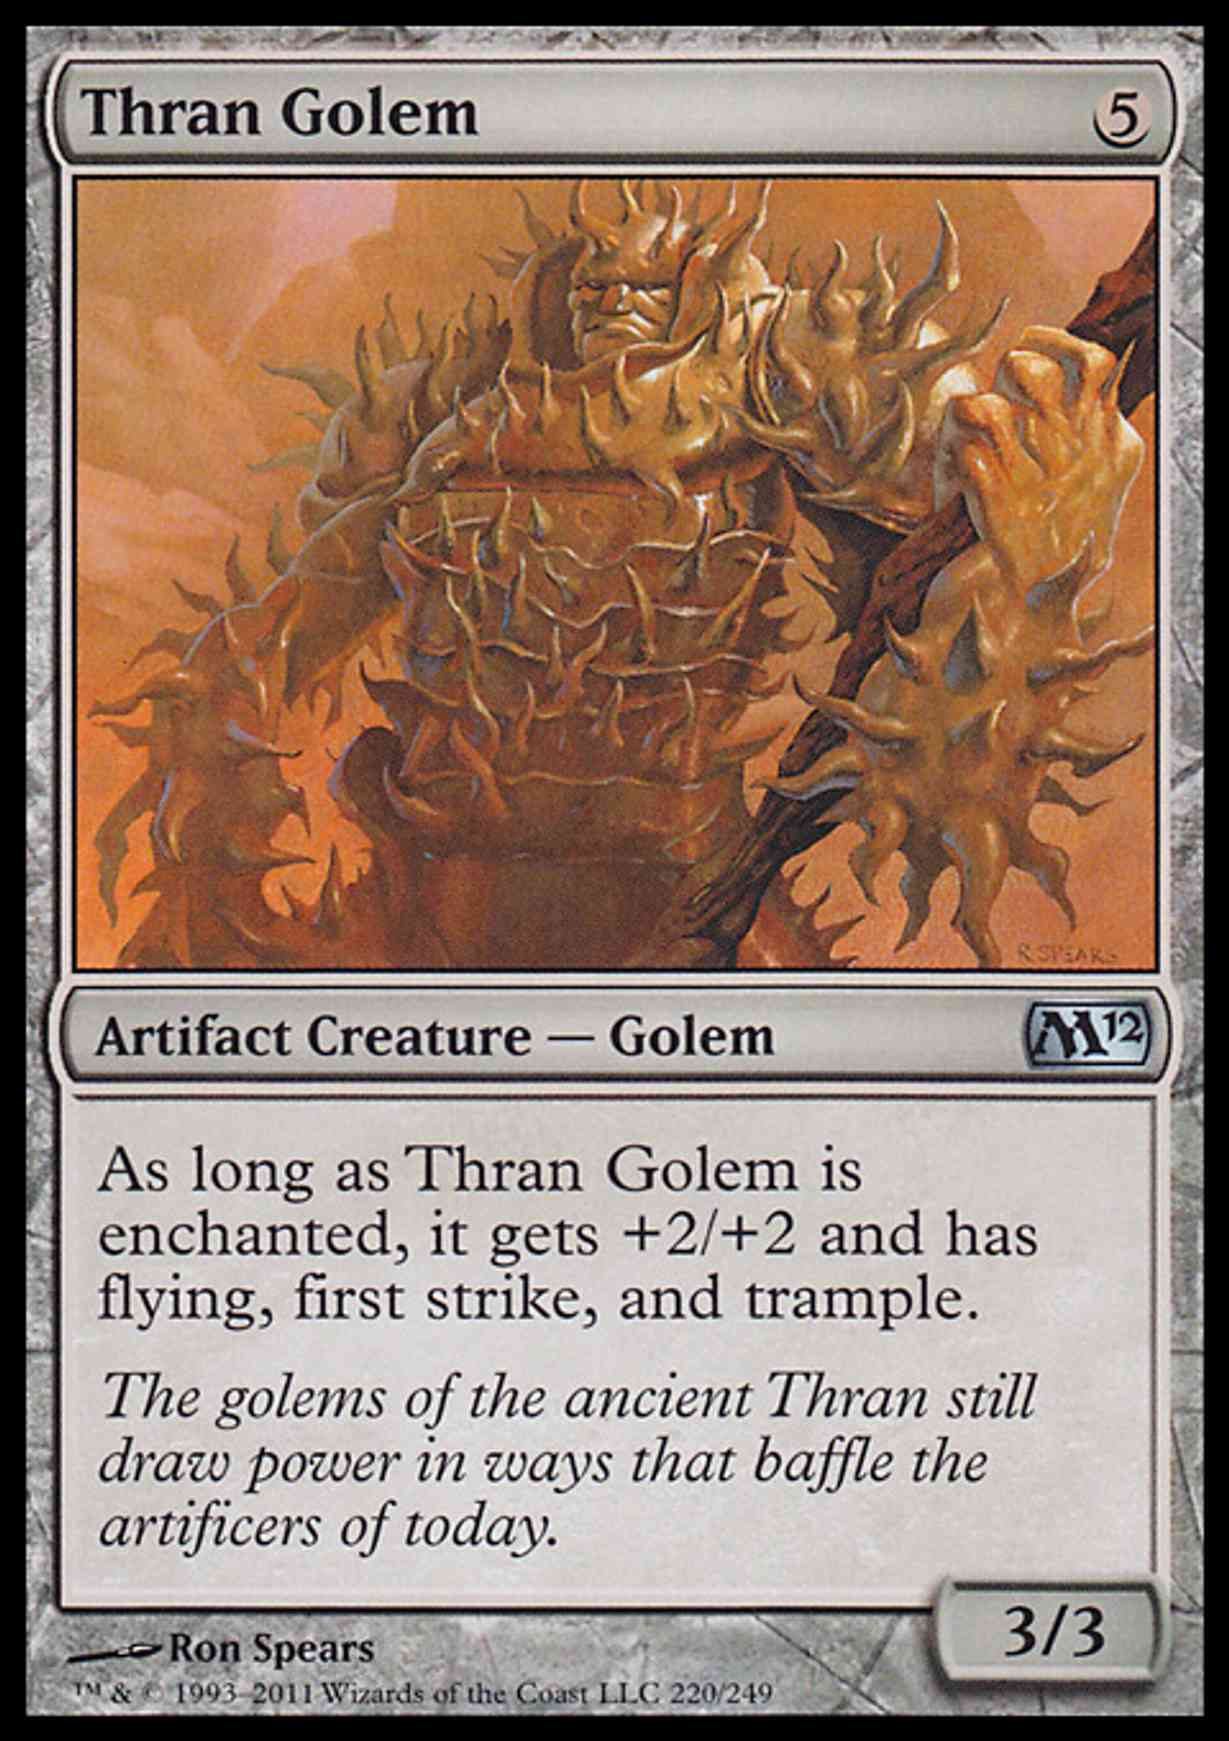 Thran Golem magic card front